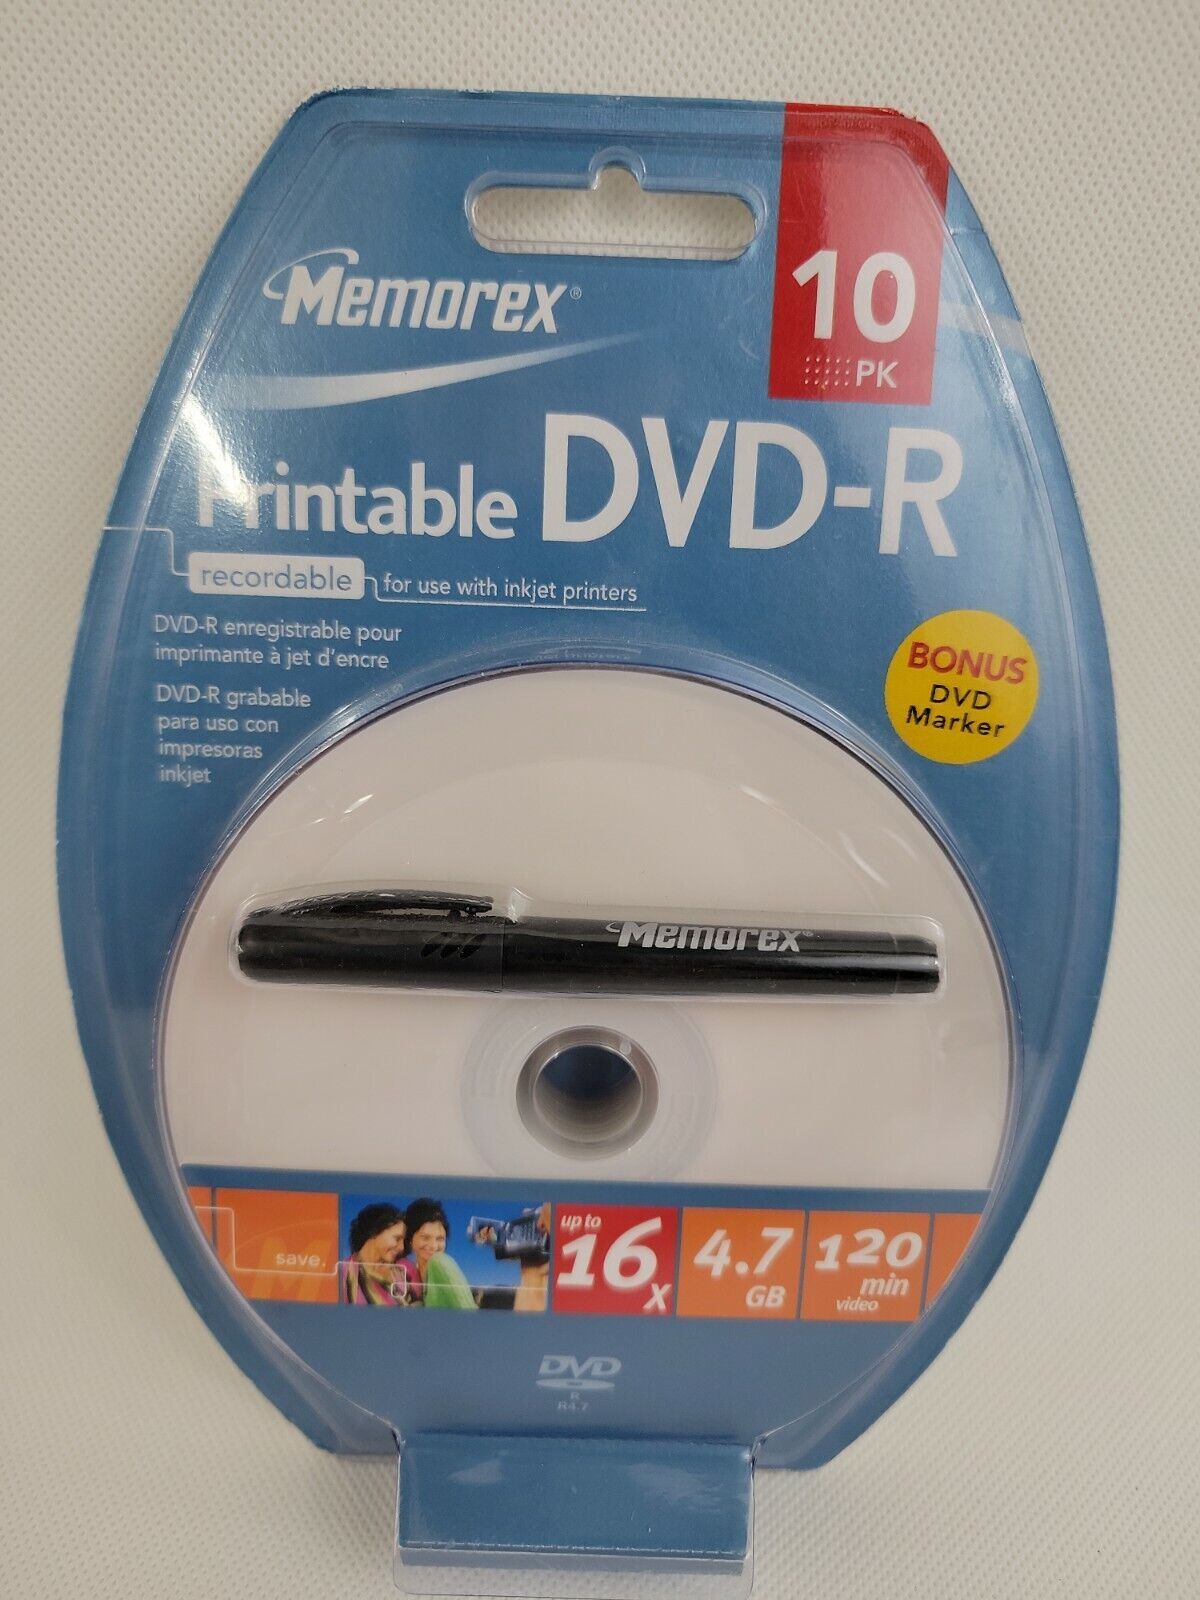 MEMOREX PRINTABLE DVD-R 10 Pack with Marker 10pk